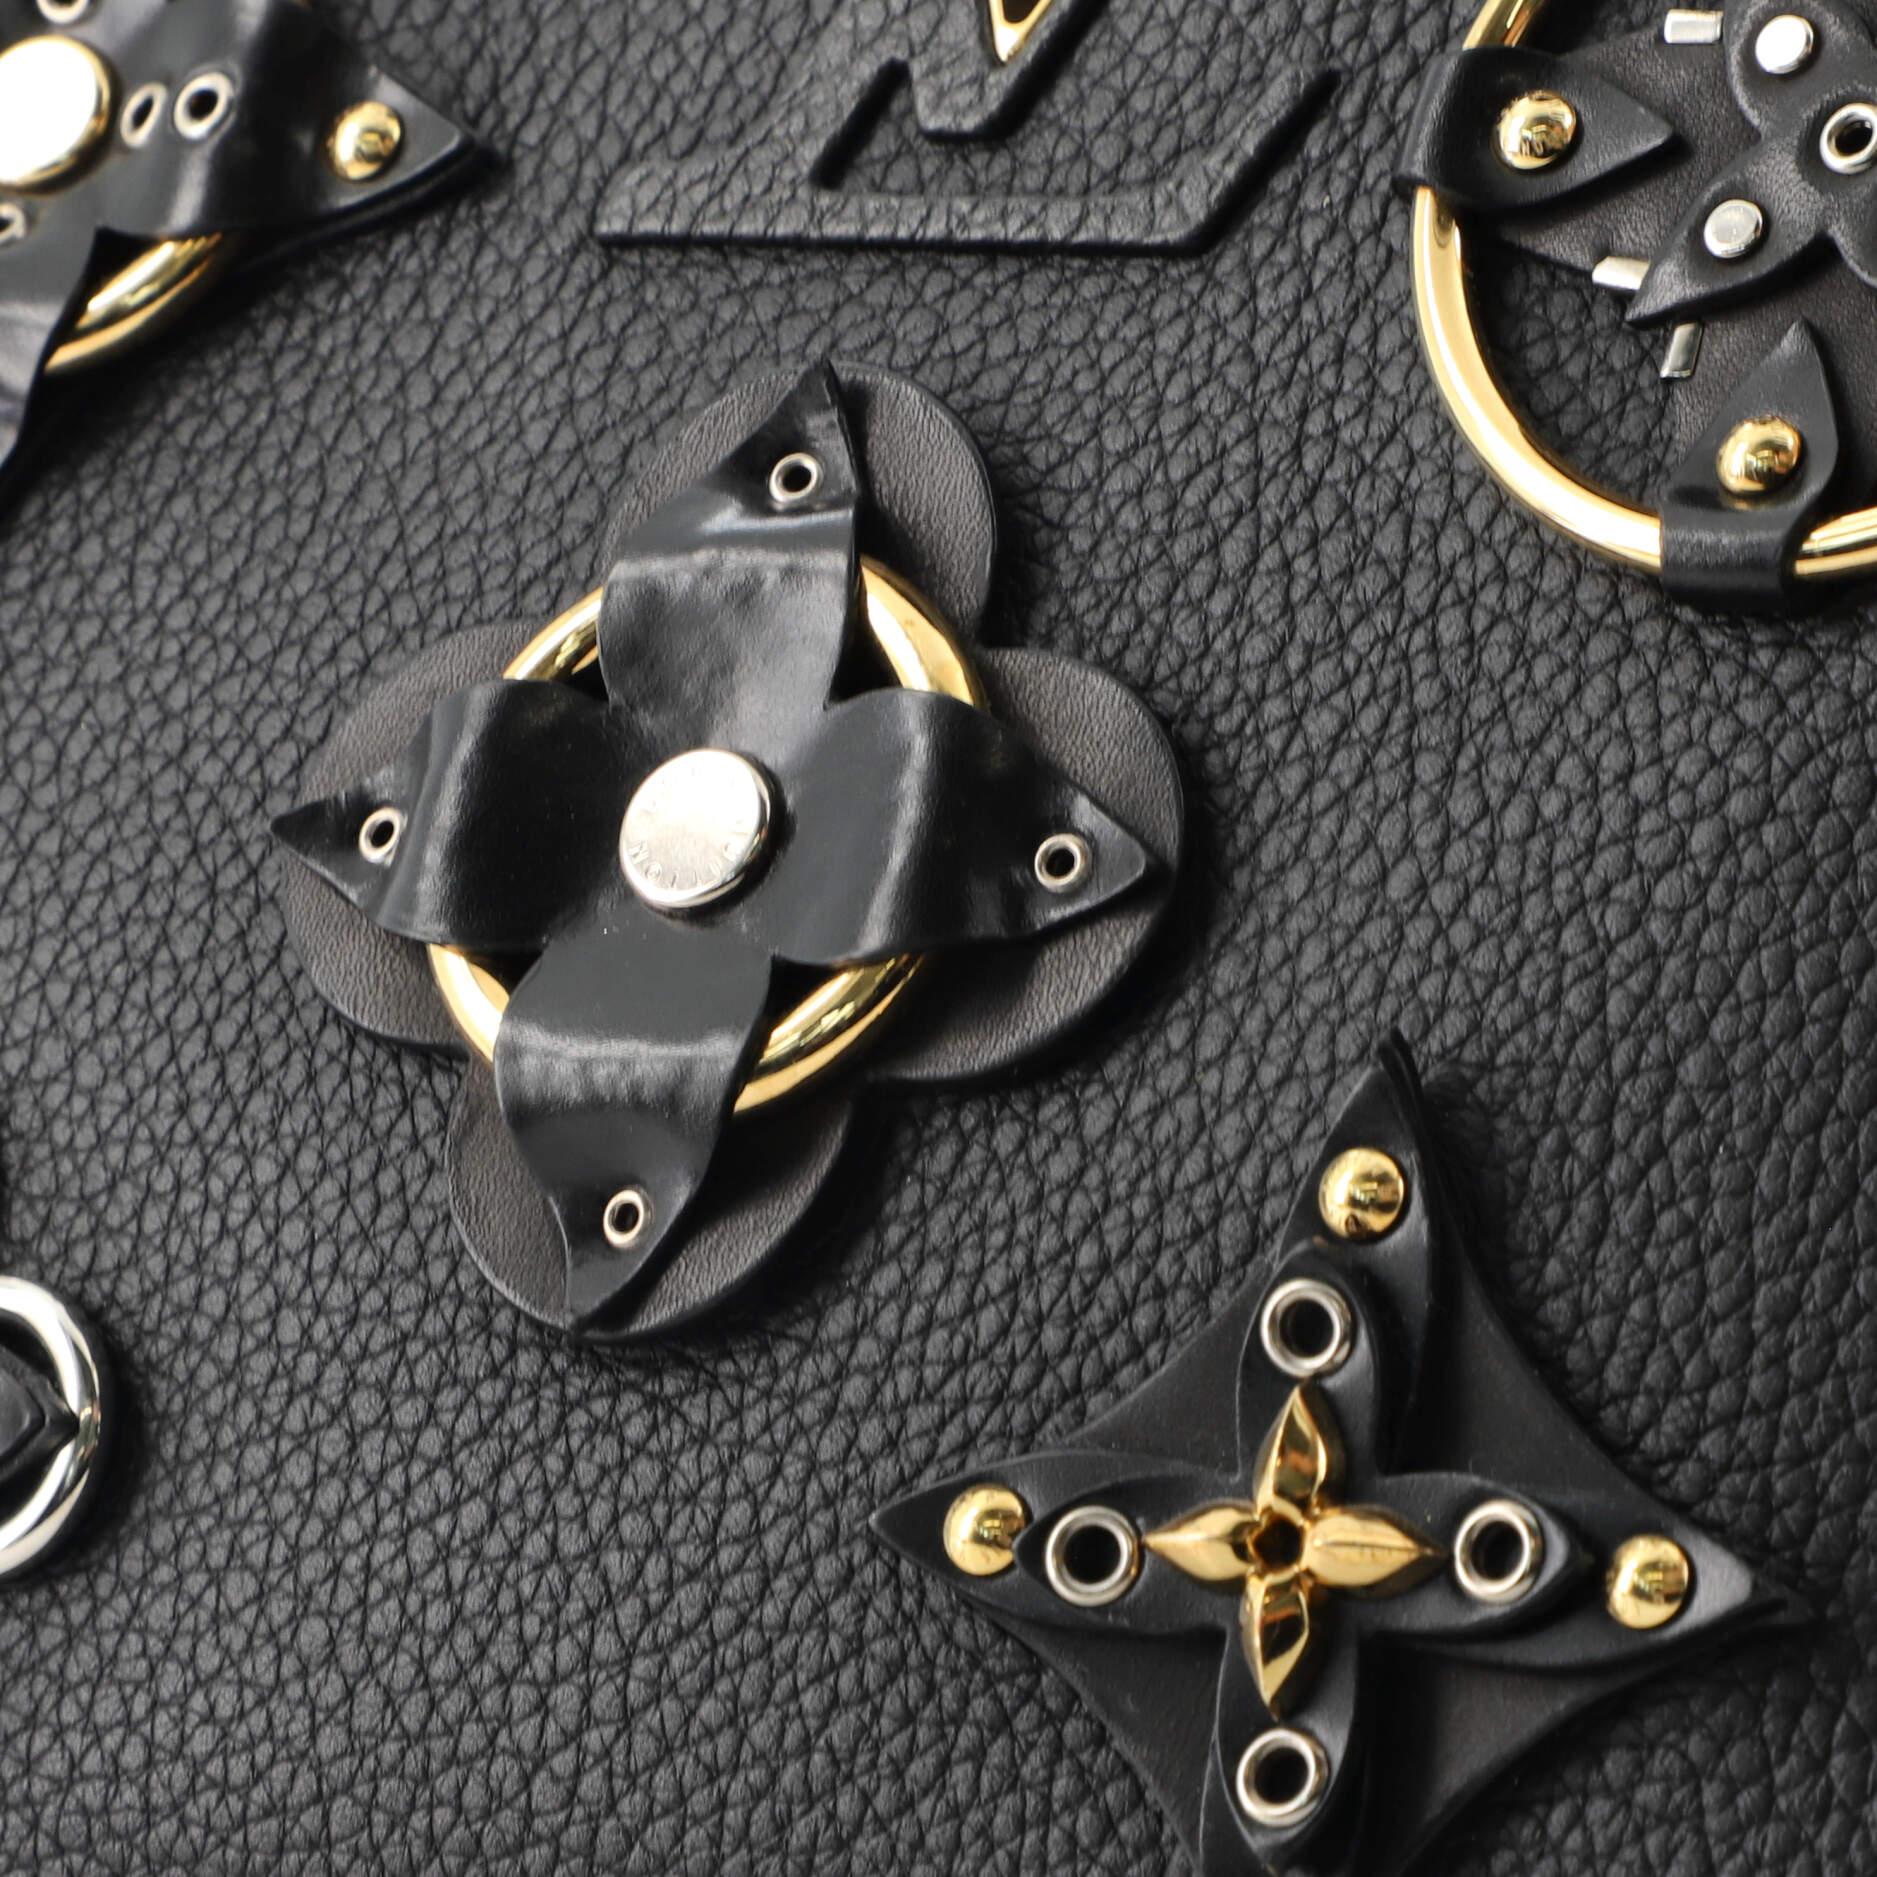 Louis Vuitton Capucines Bag Limited Edition Leather with Applique PM 2